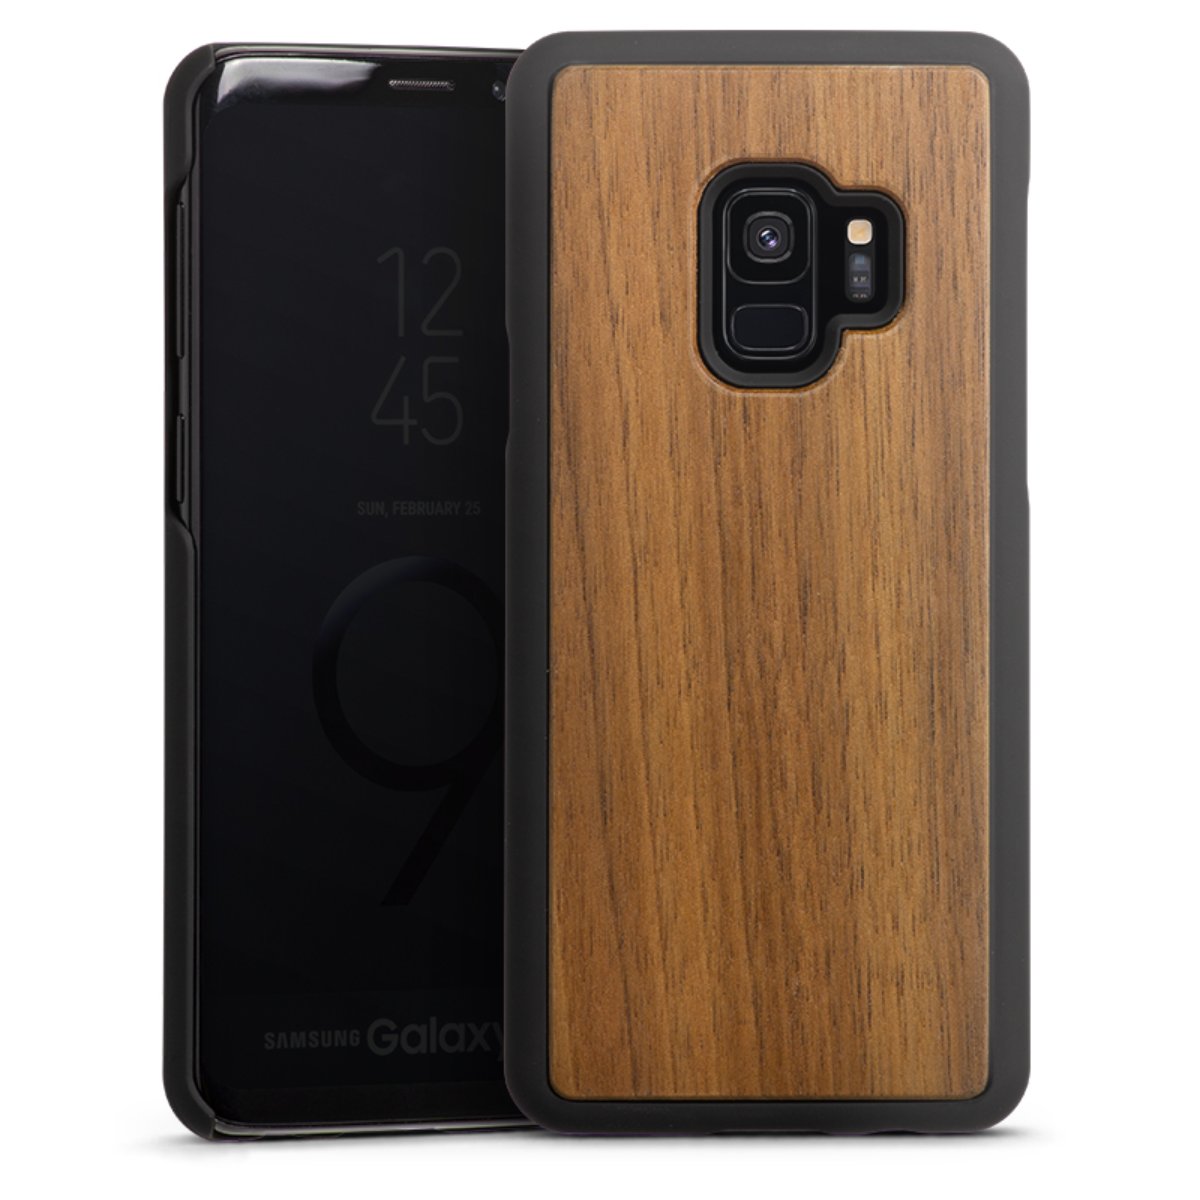 Wooden Hard Case pour Samsung Galaxy S9